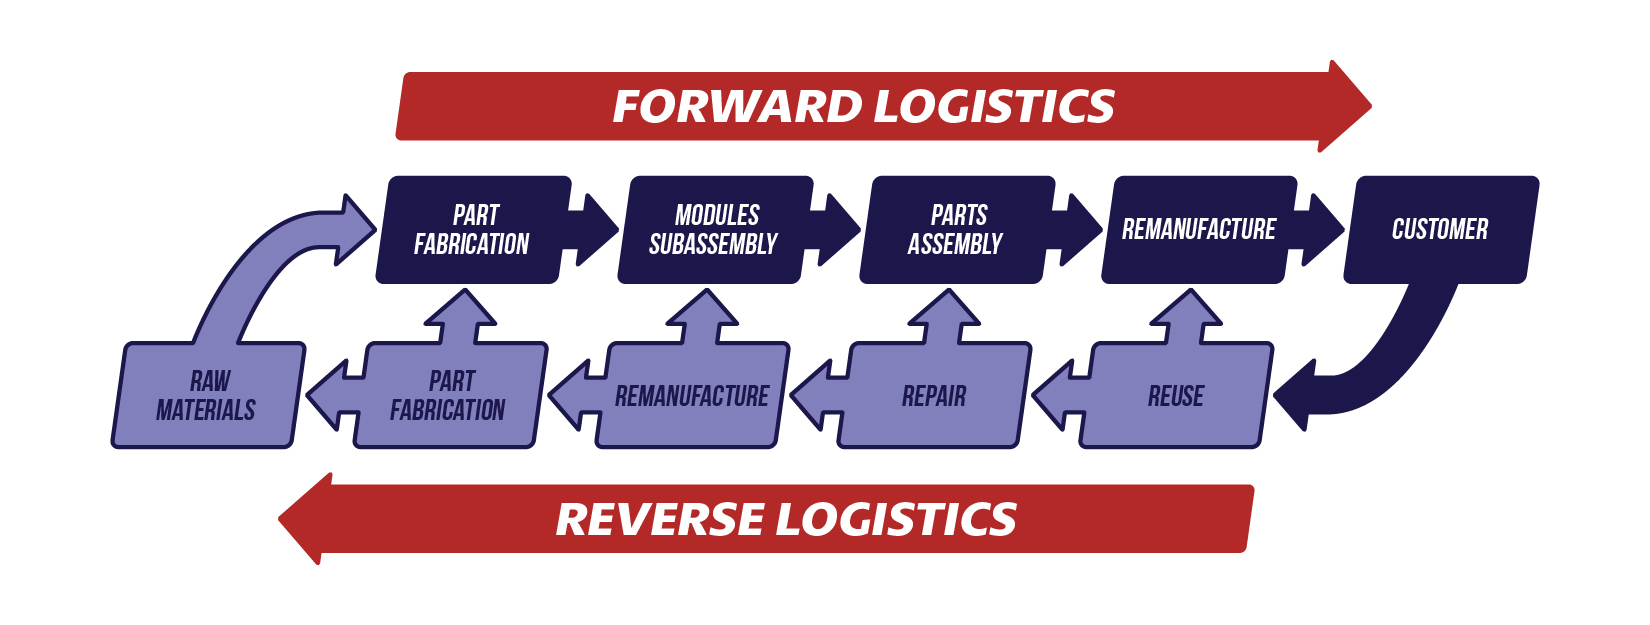 REVERSE LOGISTICS | The blog of Logistics at MGEPS at UPV